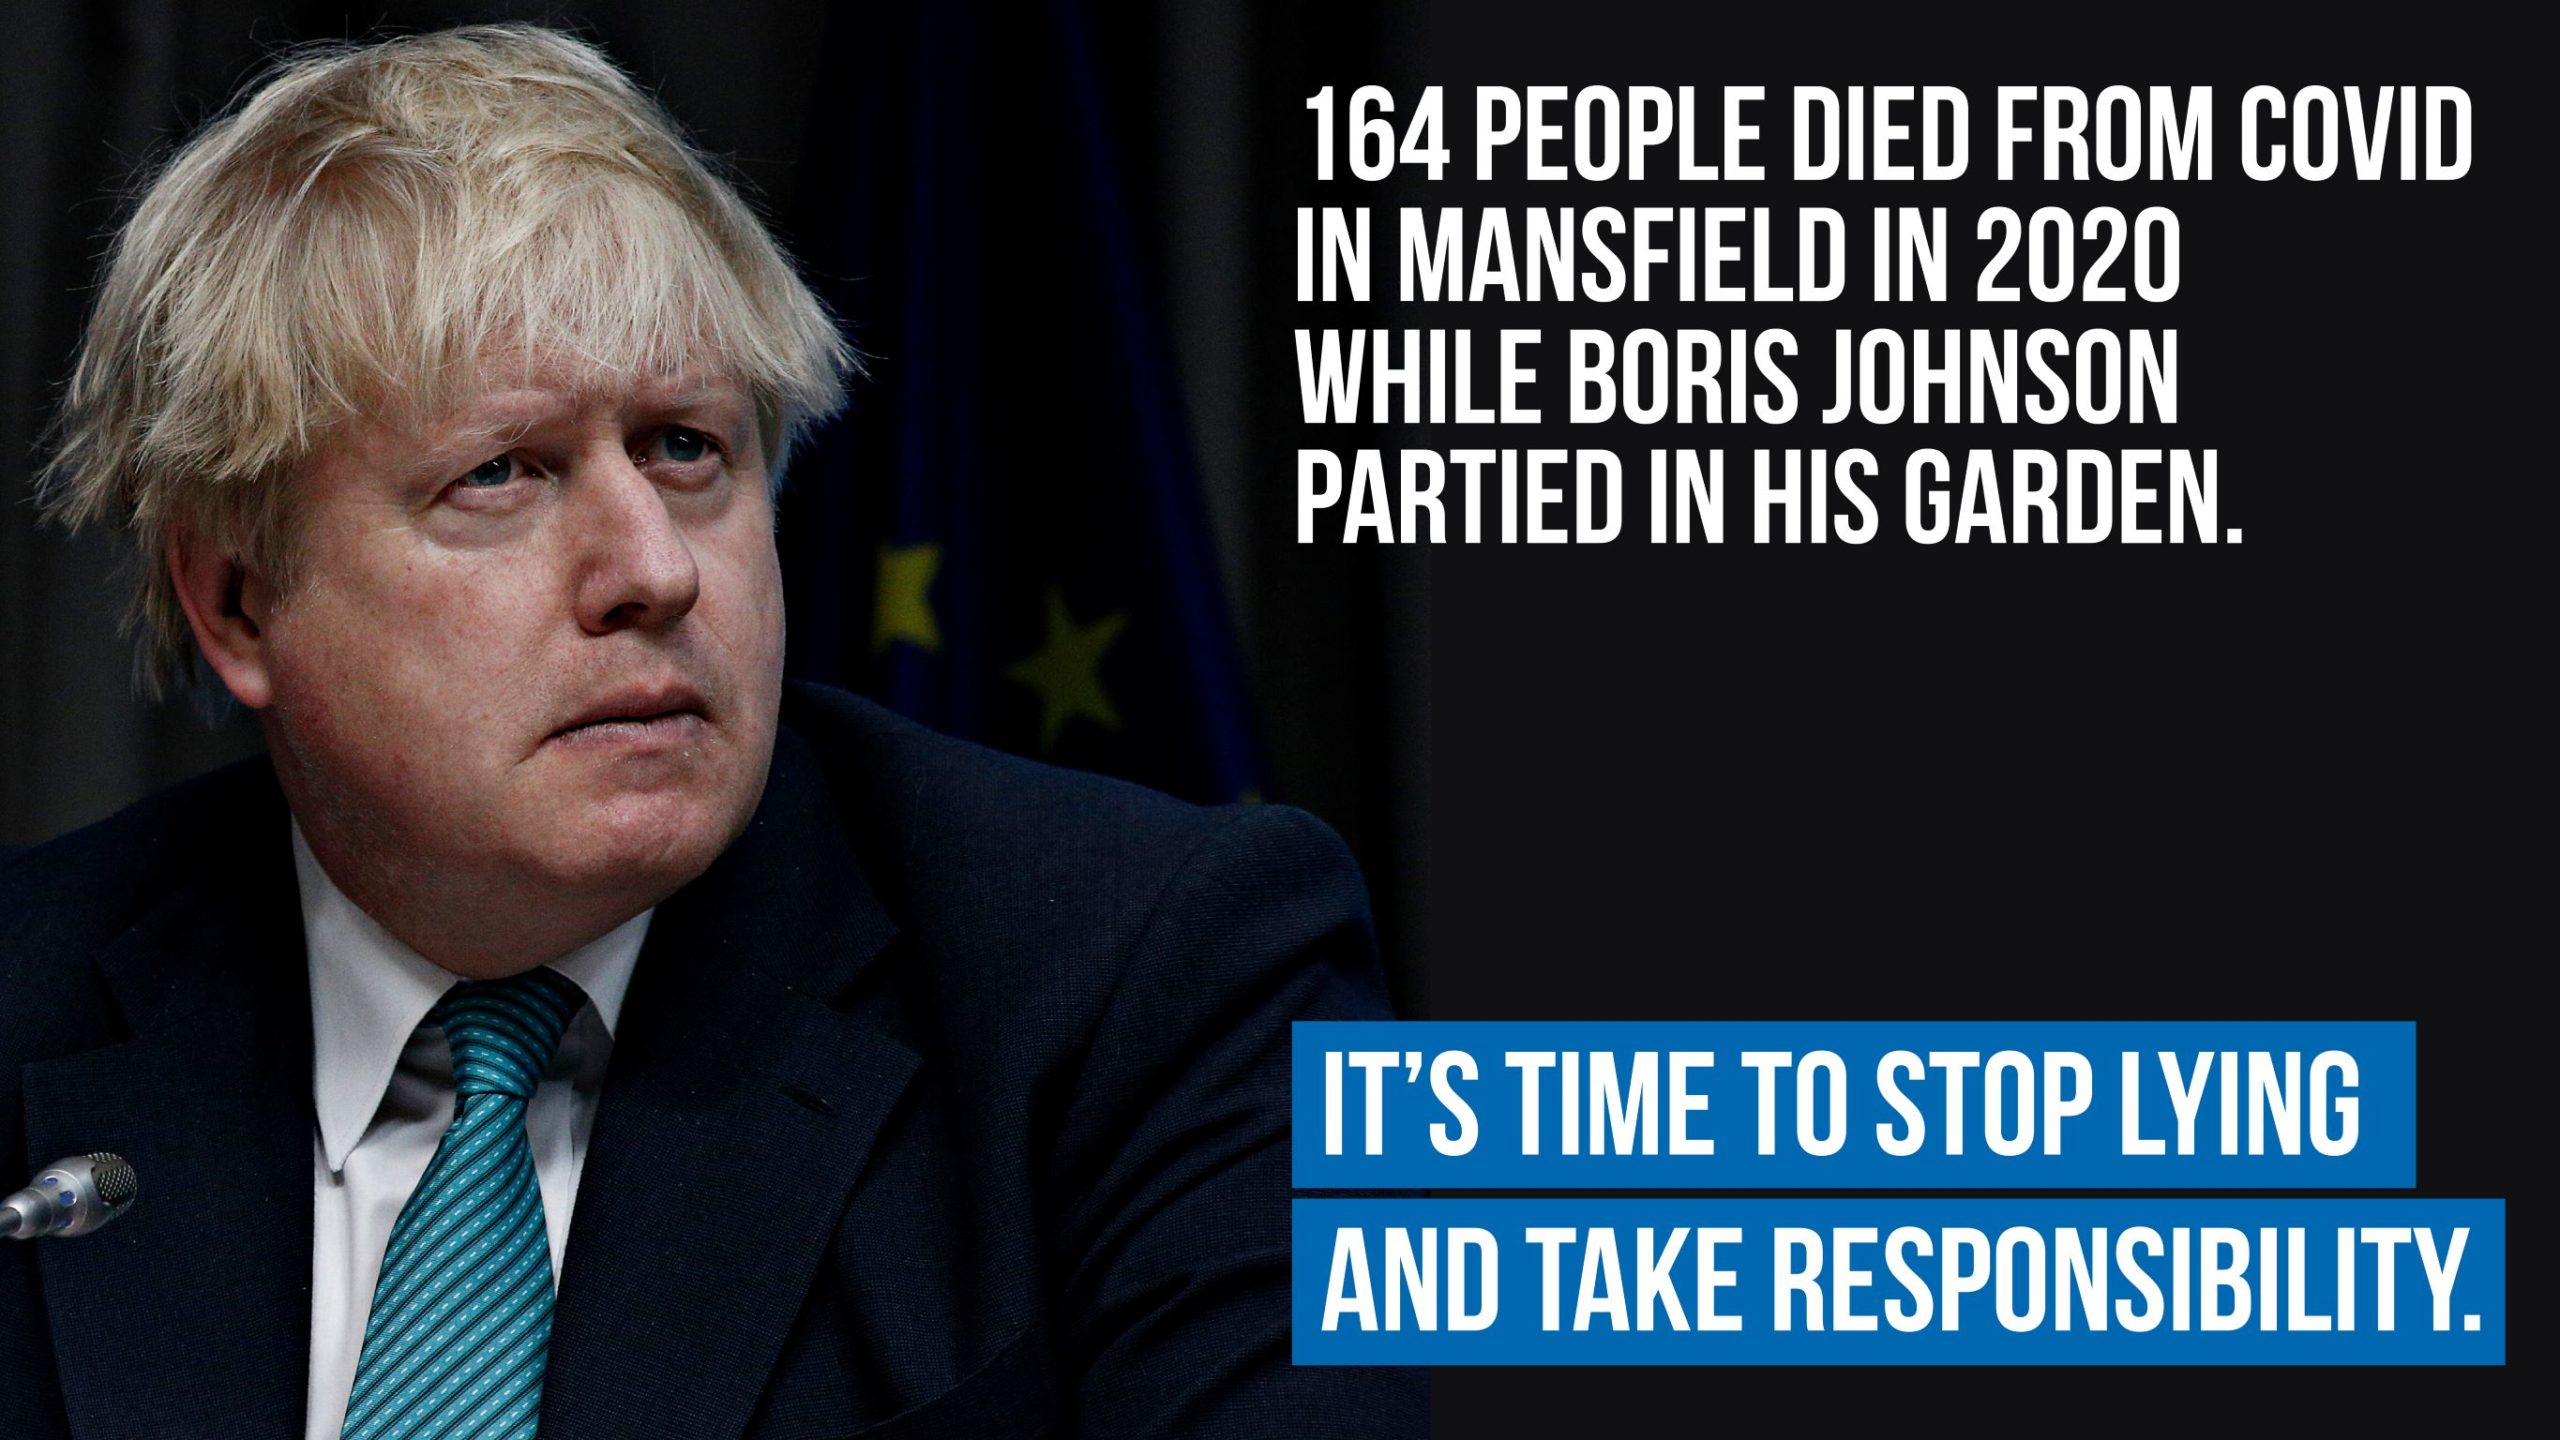 Boris Johnson partied. 164 people died in Mansfield.